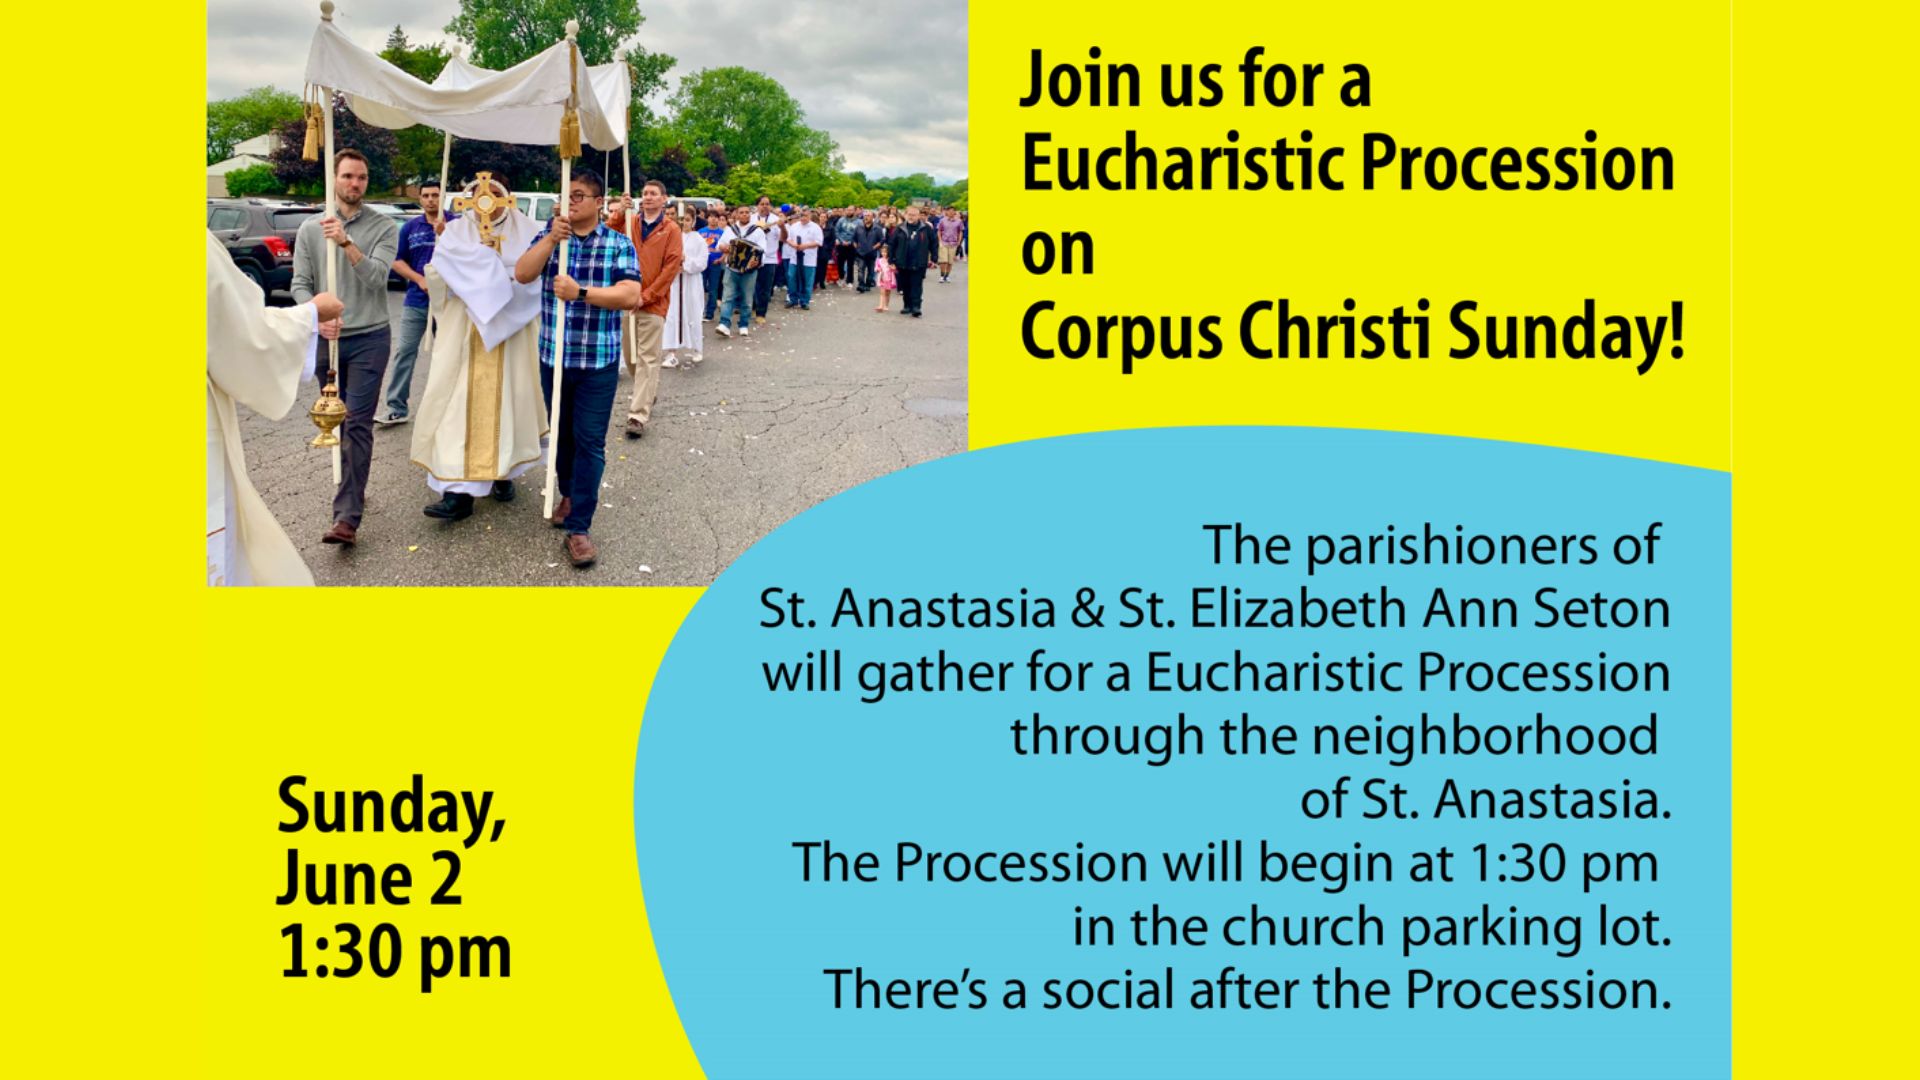 Eucharistic Procession on Corpus Christi Sunday